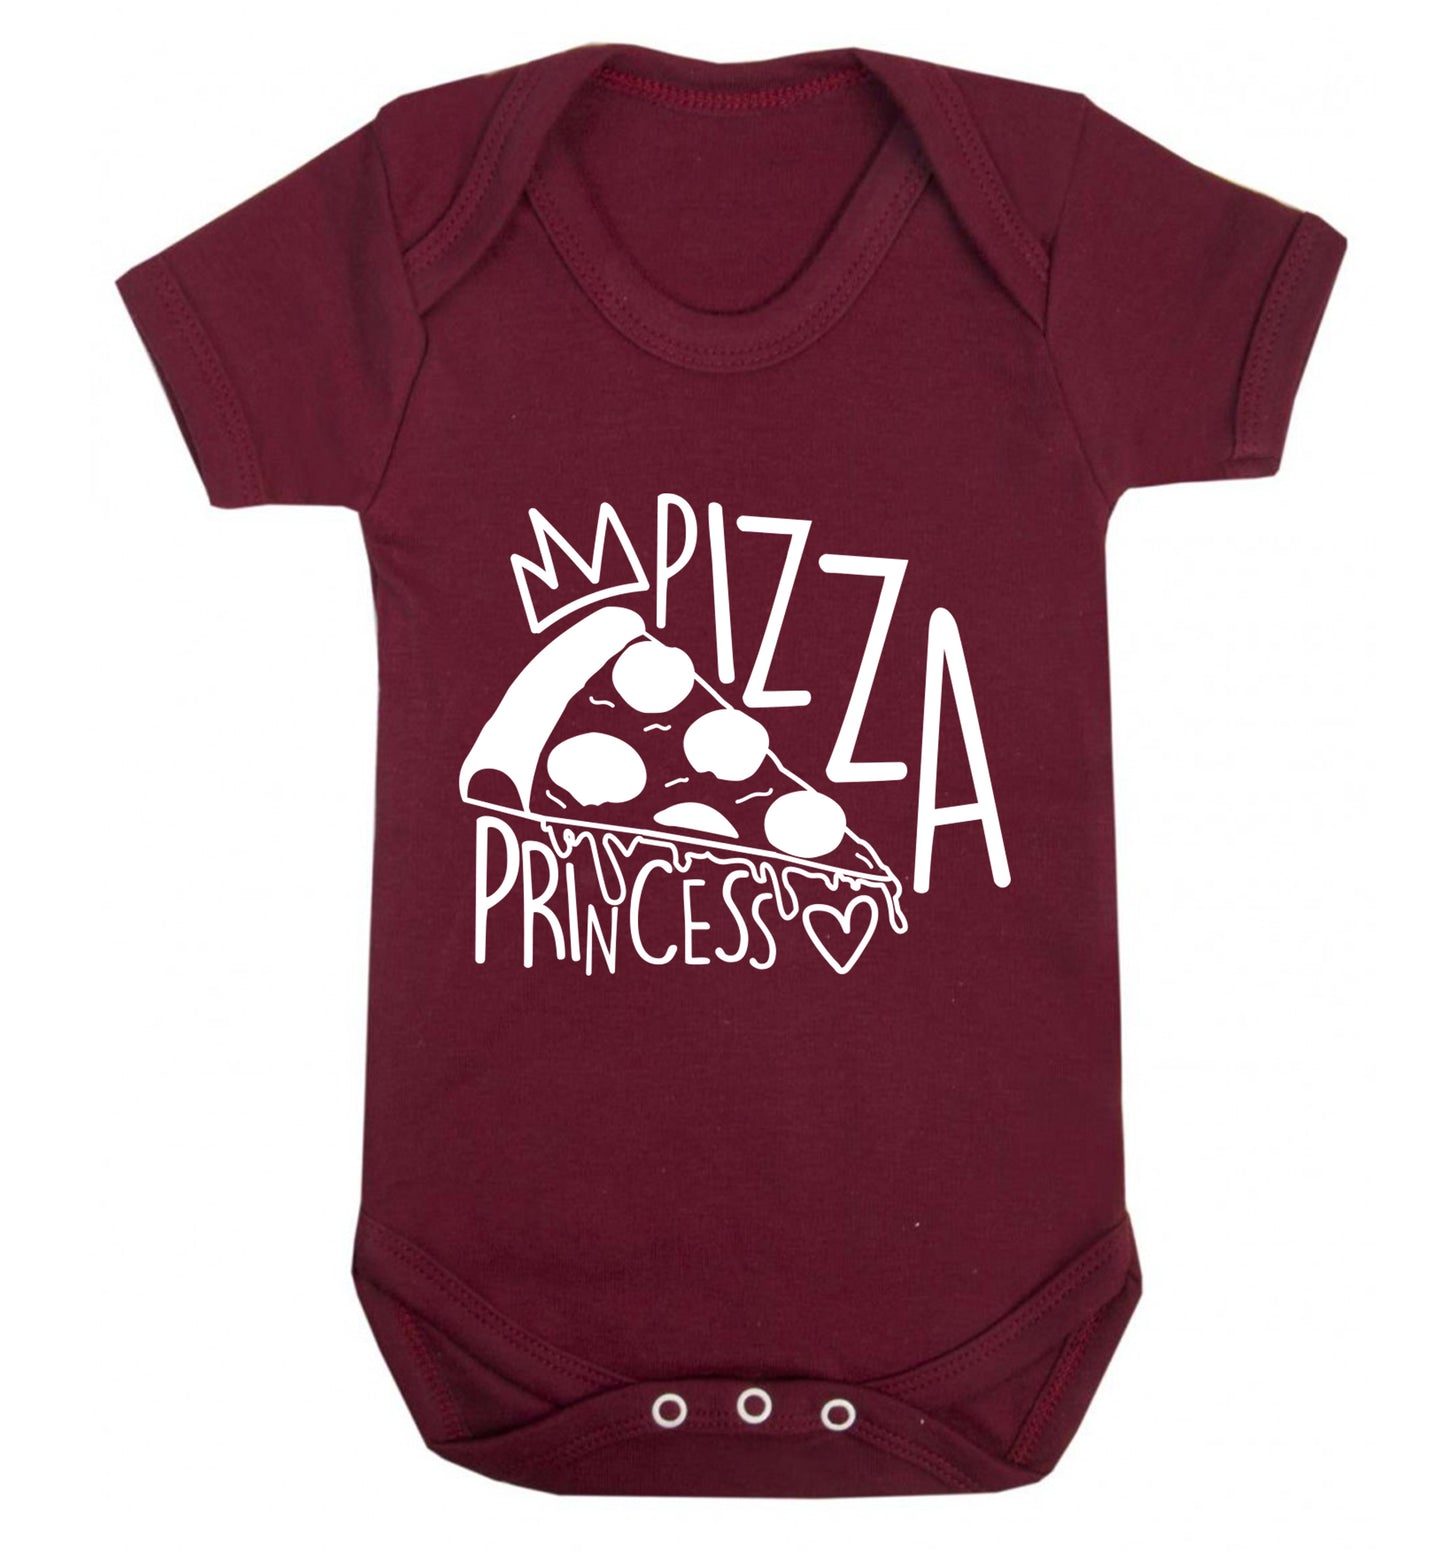 Pizza Princess Baby Vest maroon 18-24 months